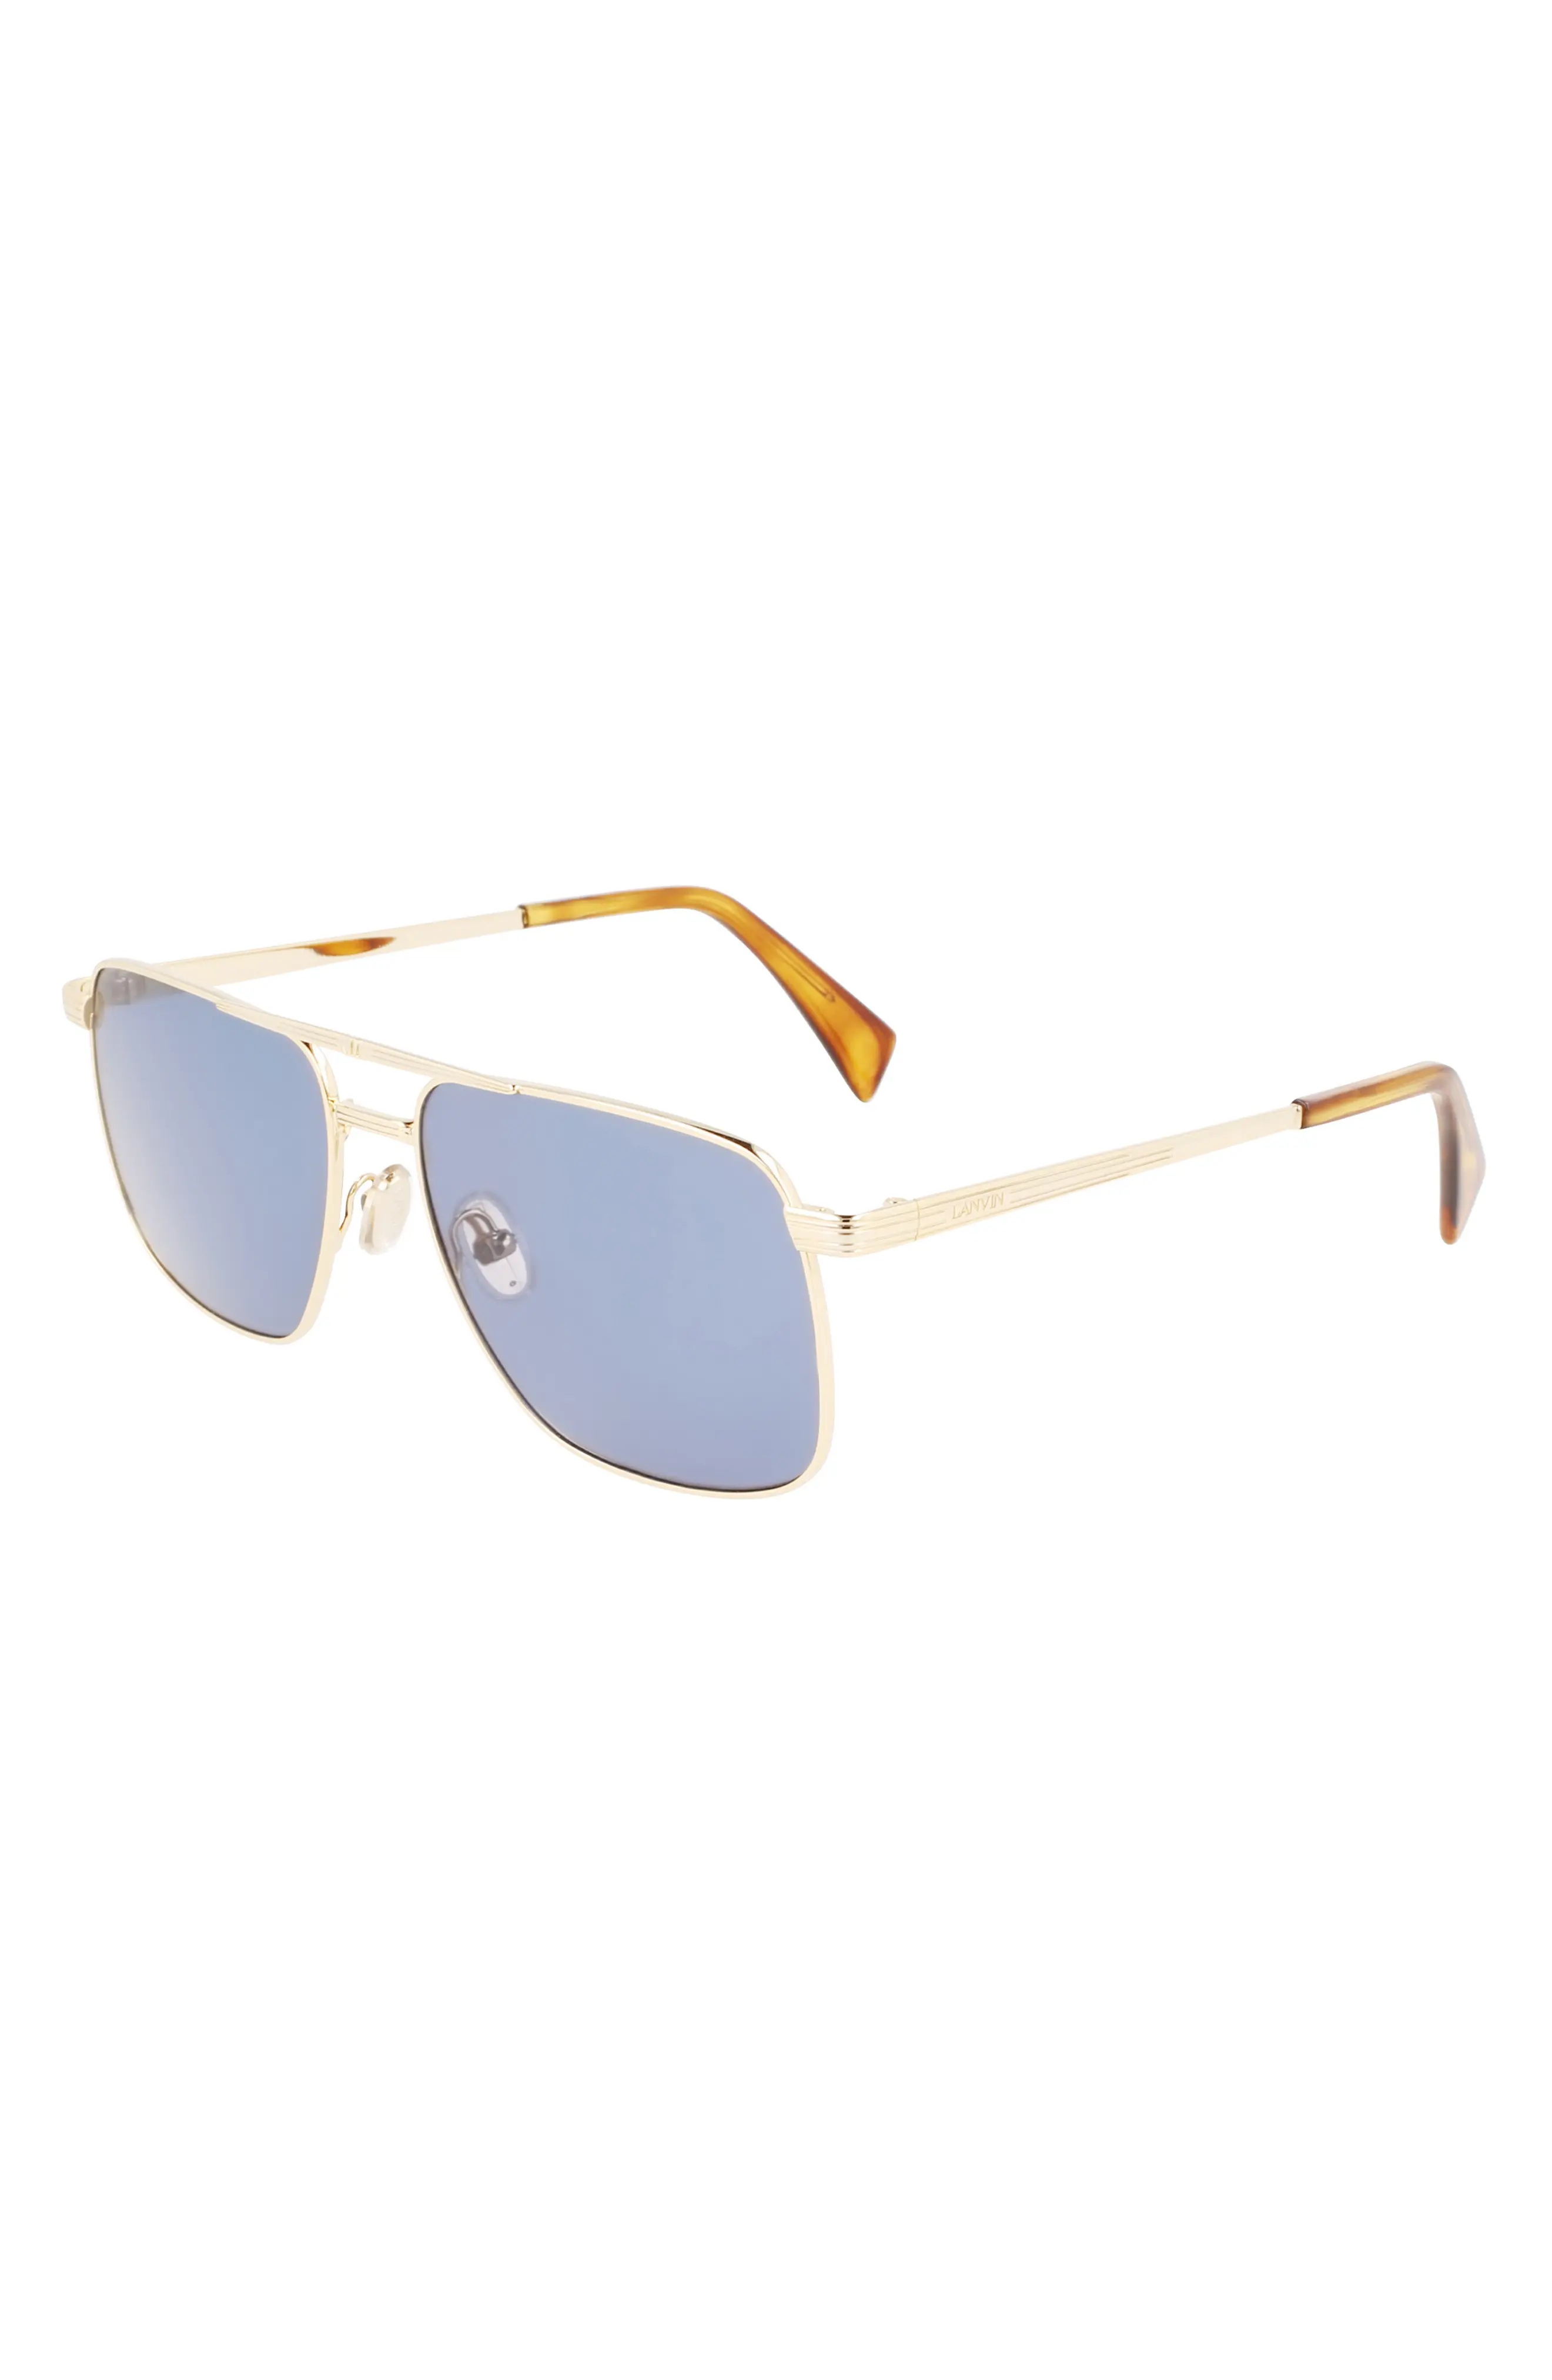 JL 58mm Rectangular Sunglasses in Gold /Blue - 2